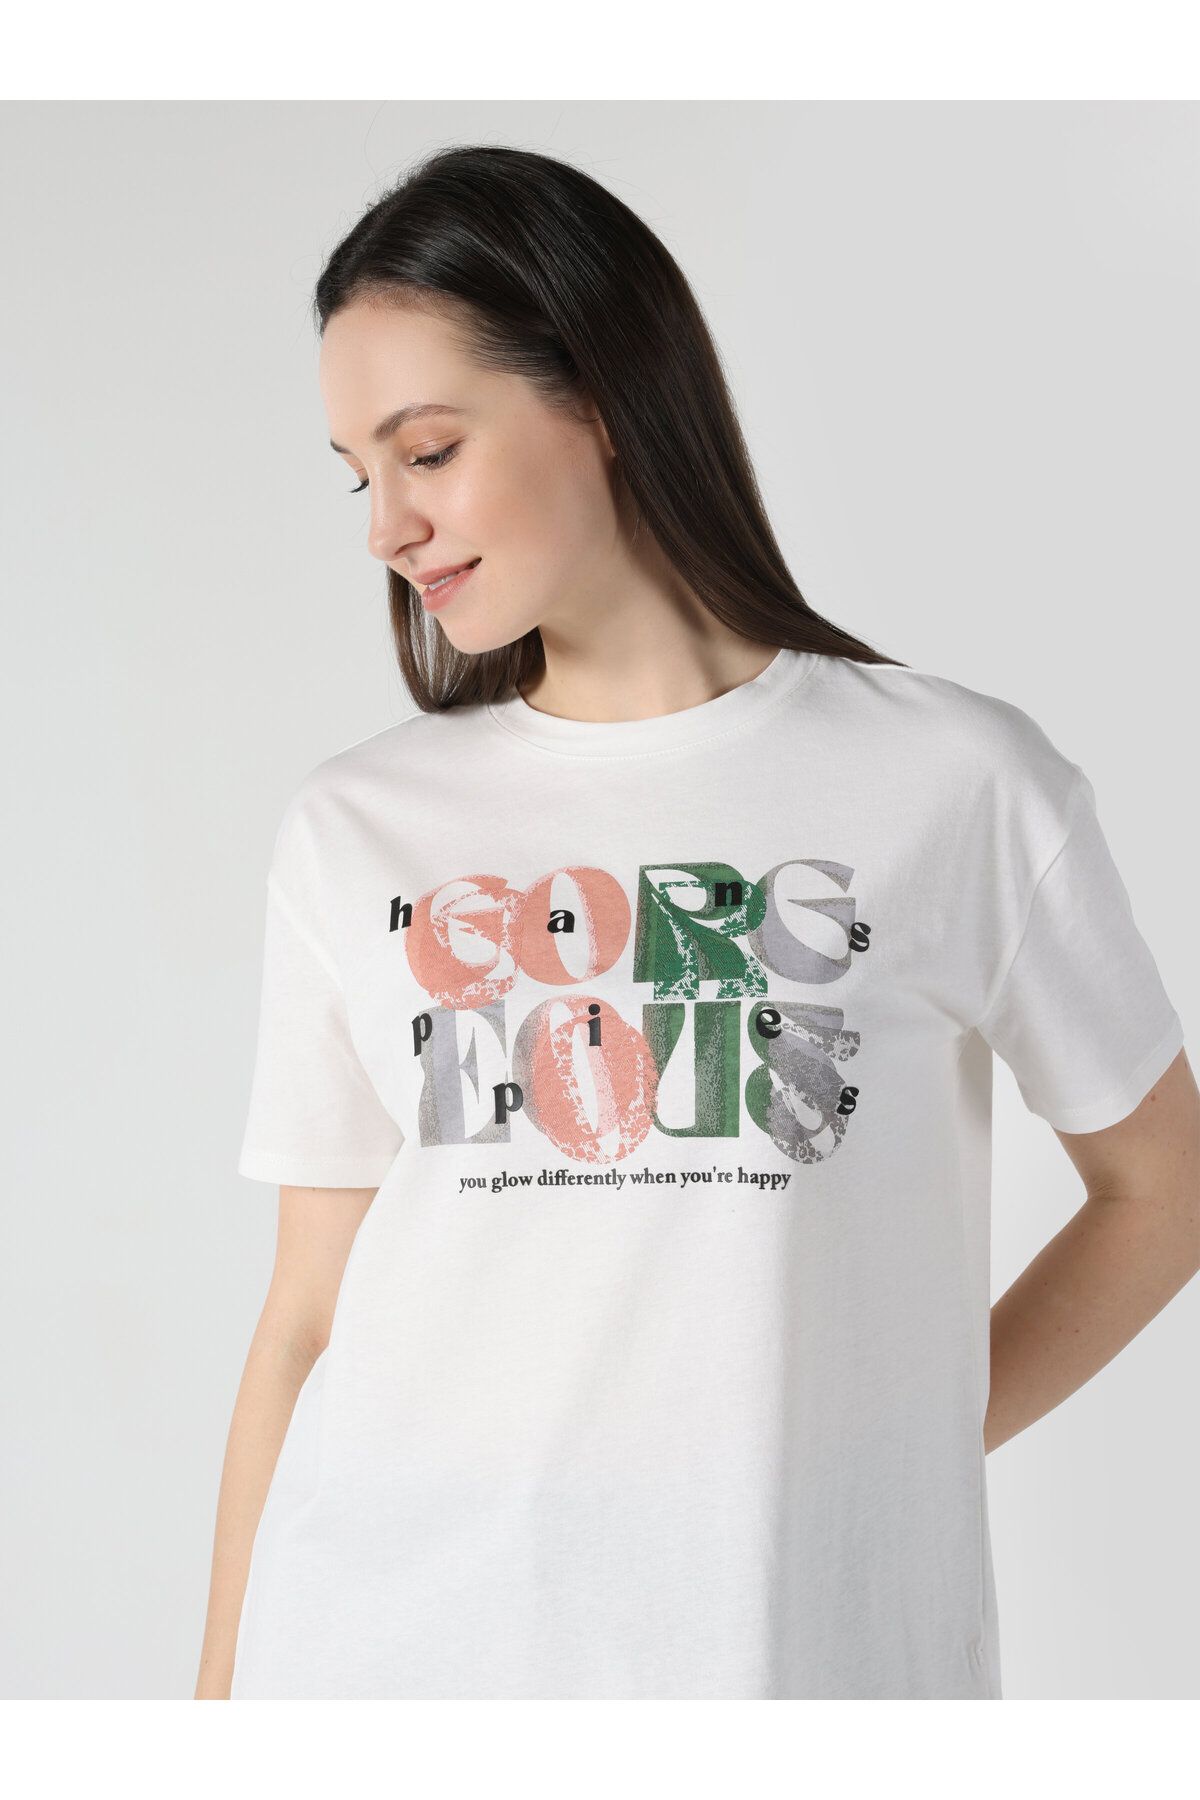 Colin’s تی شرت آستین کوتاه زنانه با چاپ یقه معمولی فیت